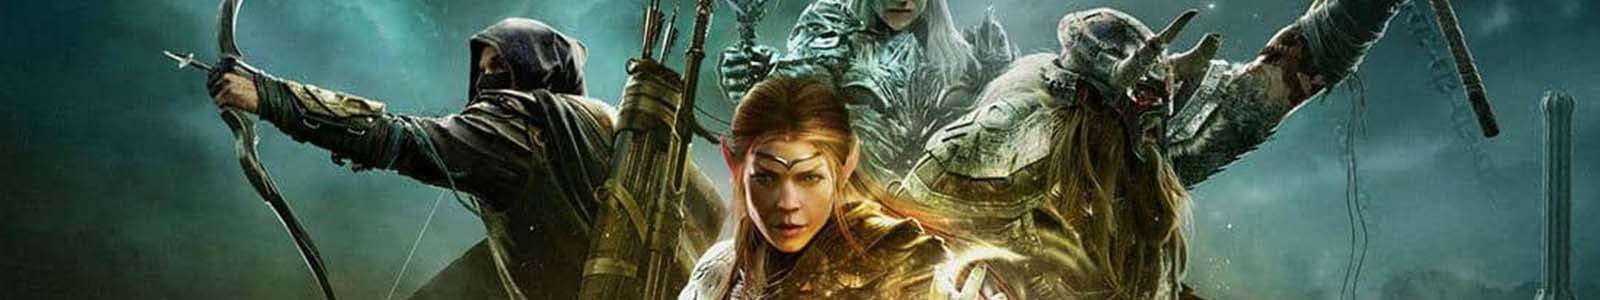 Free to Play Event Guide - Elder Scrolls Online header